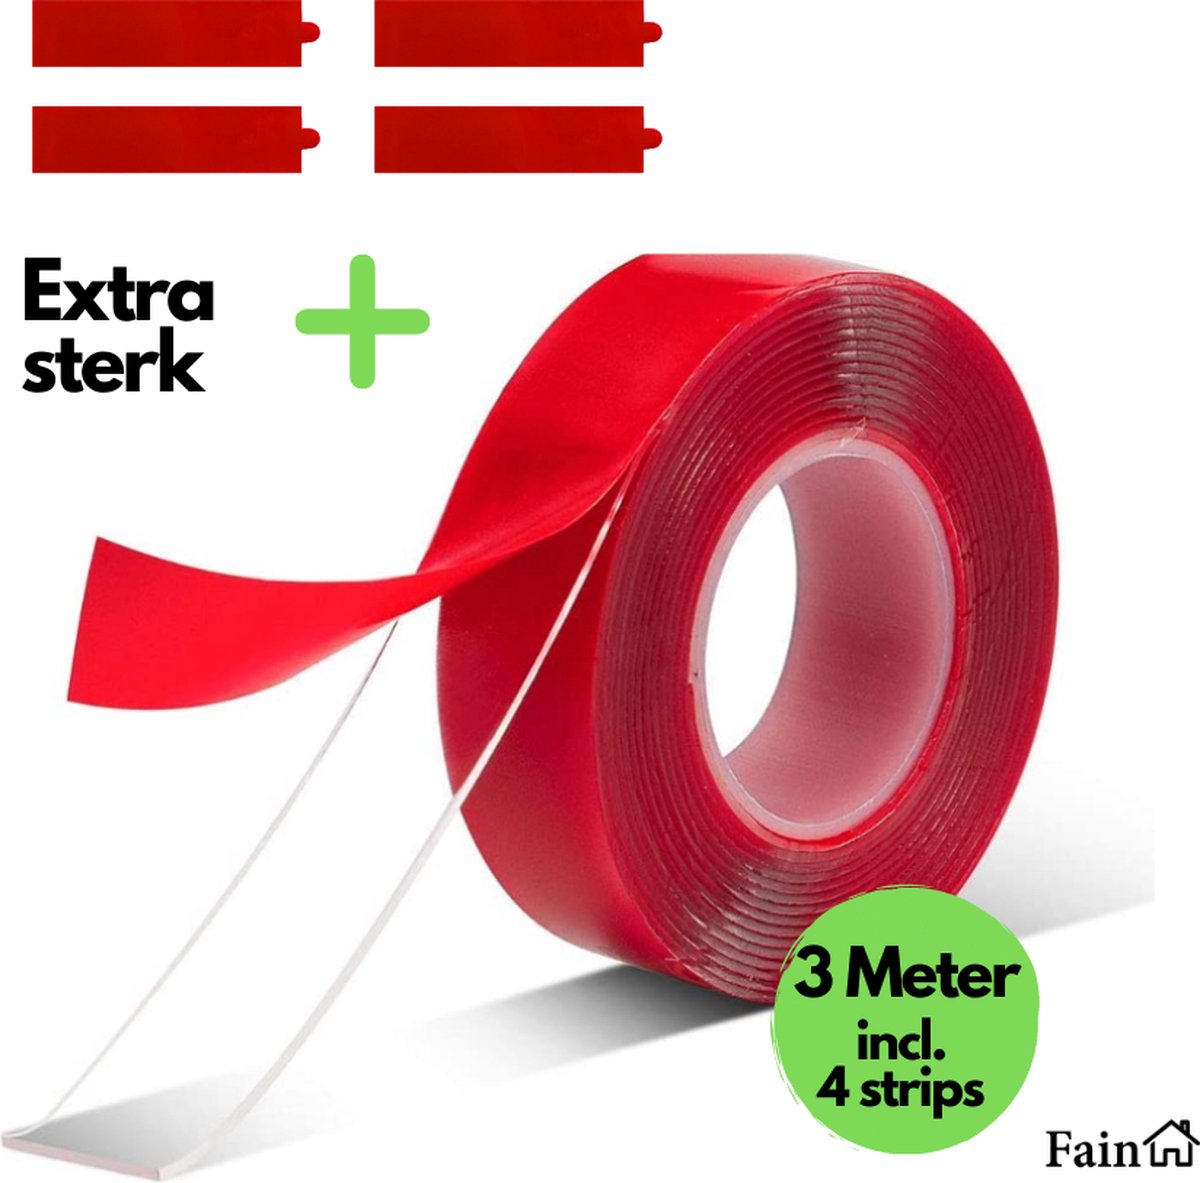 Fain® Dubbelzijdige Tape – 3 Meter lang – incl. 4 gratis pads – Montagetape – Extra sterk – Nano tape – Transparant – Led strips - Fain